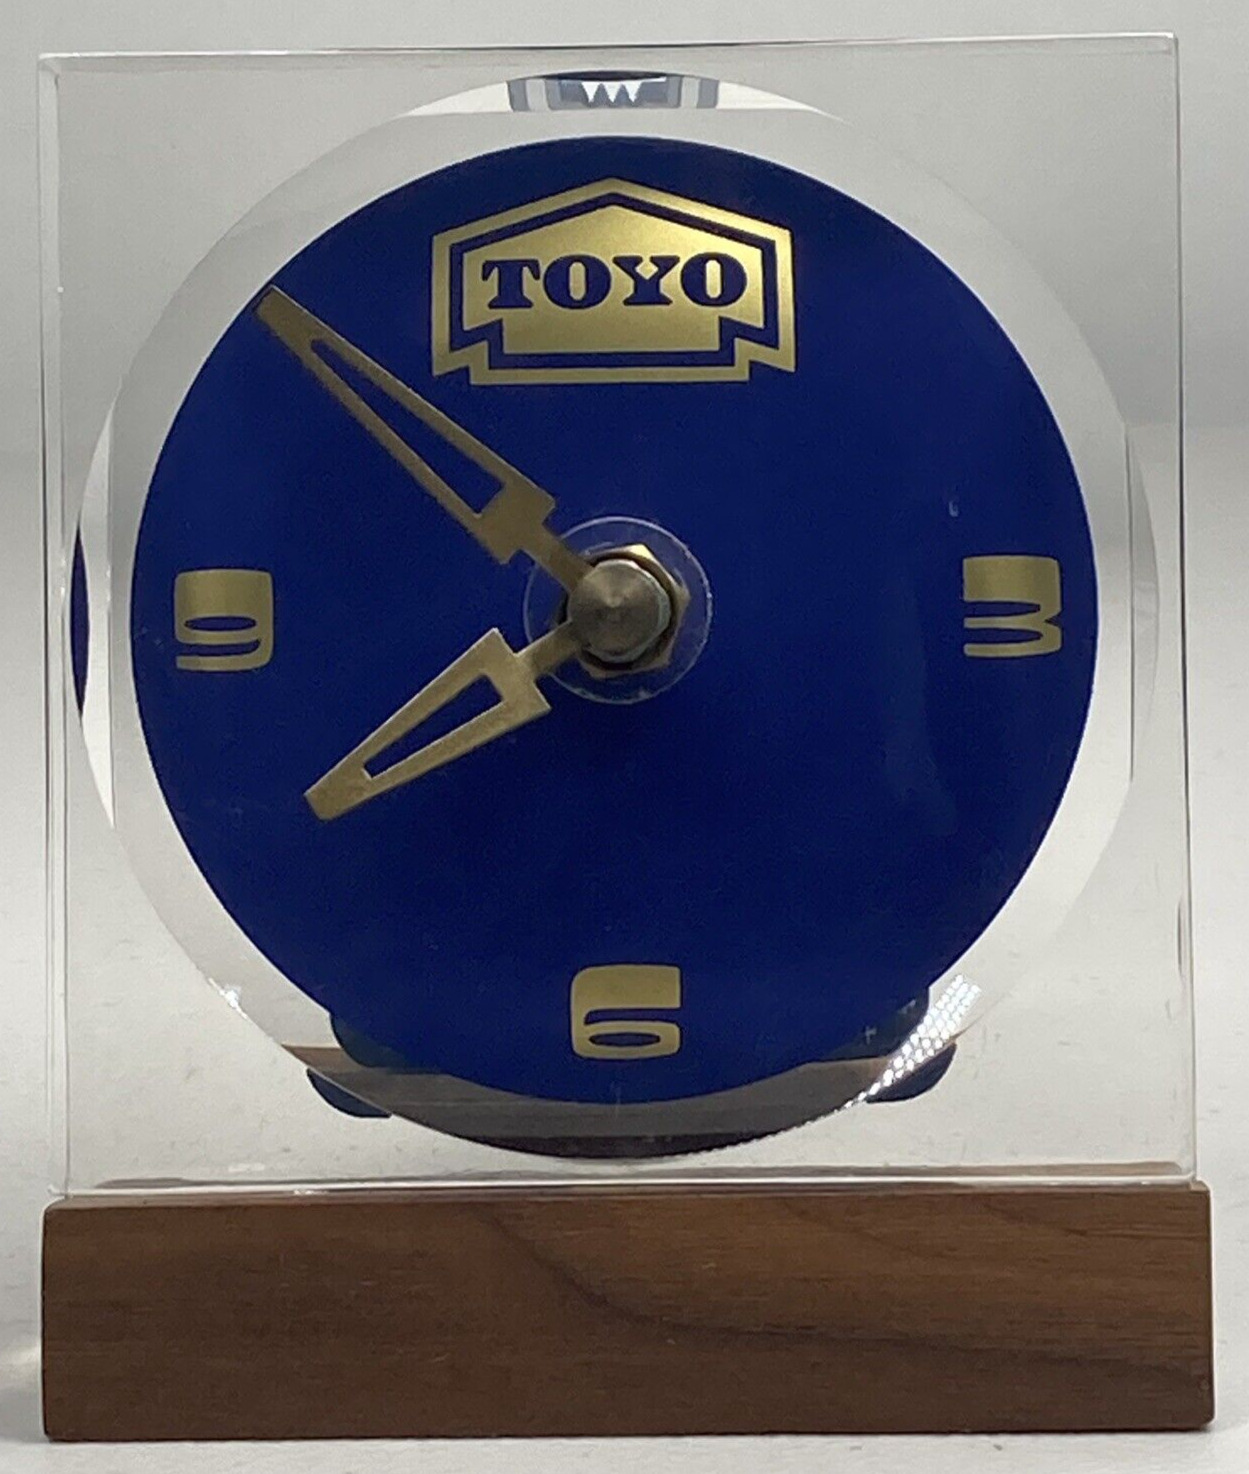 Vintage Toyo Tires Acrylic Advertising Desk Clock Blue & Gold Color Face Battery